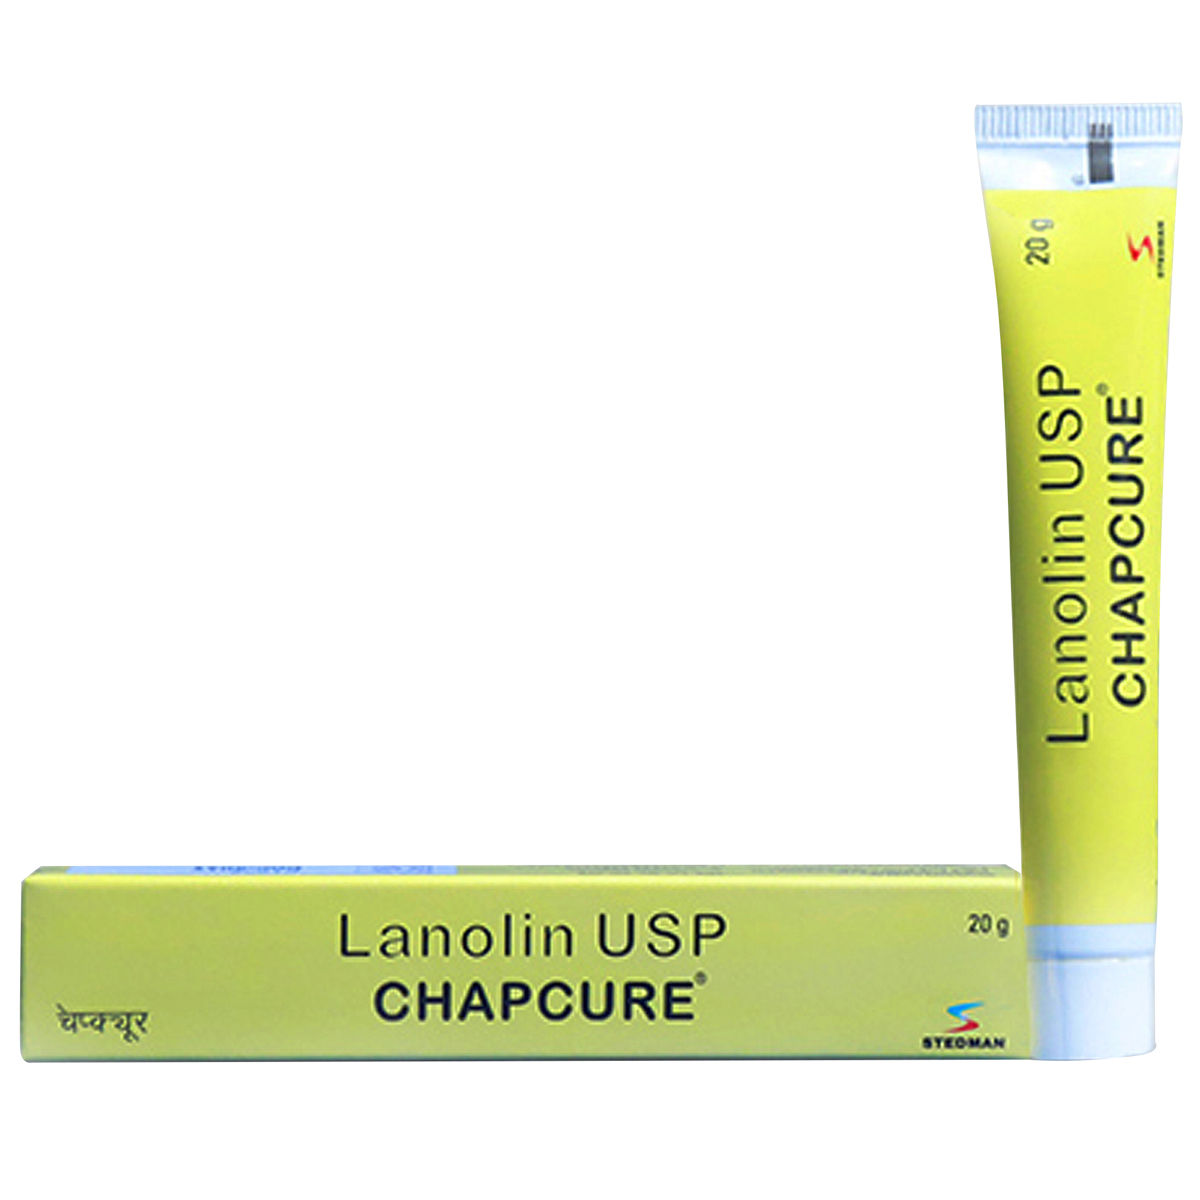 Buy Chapcure 1 mg Cream 20 gm Online